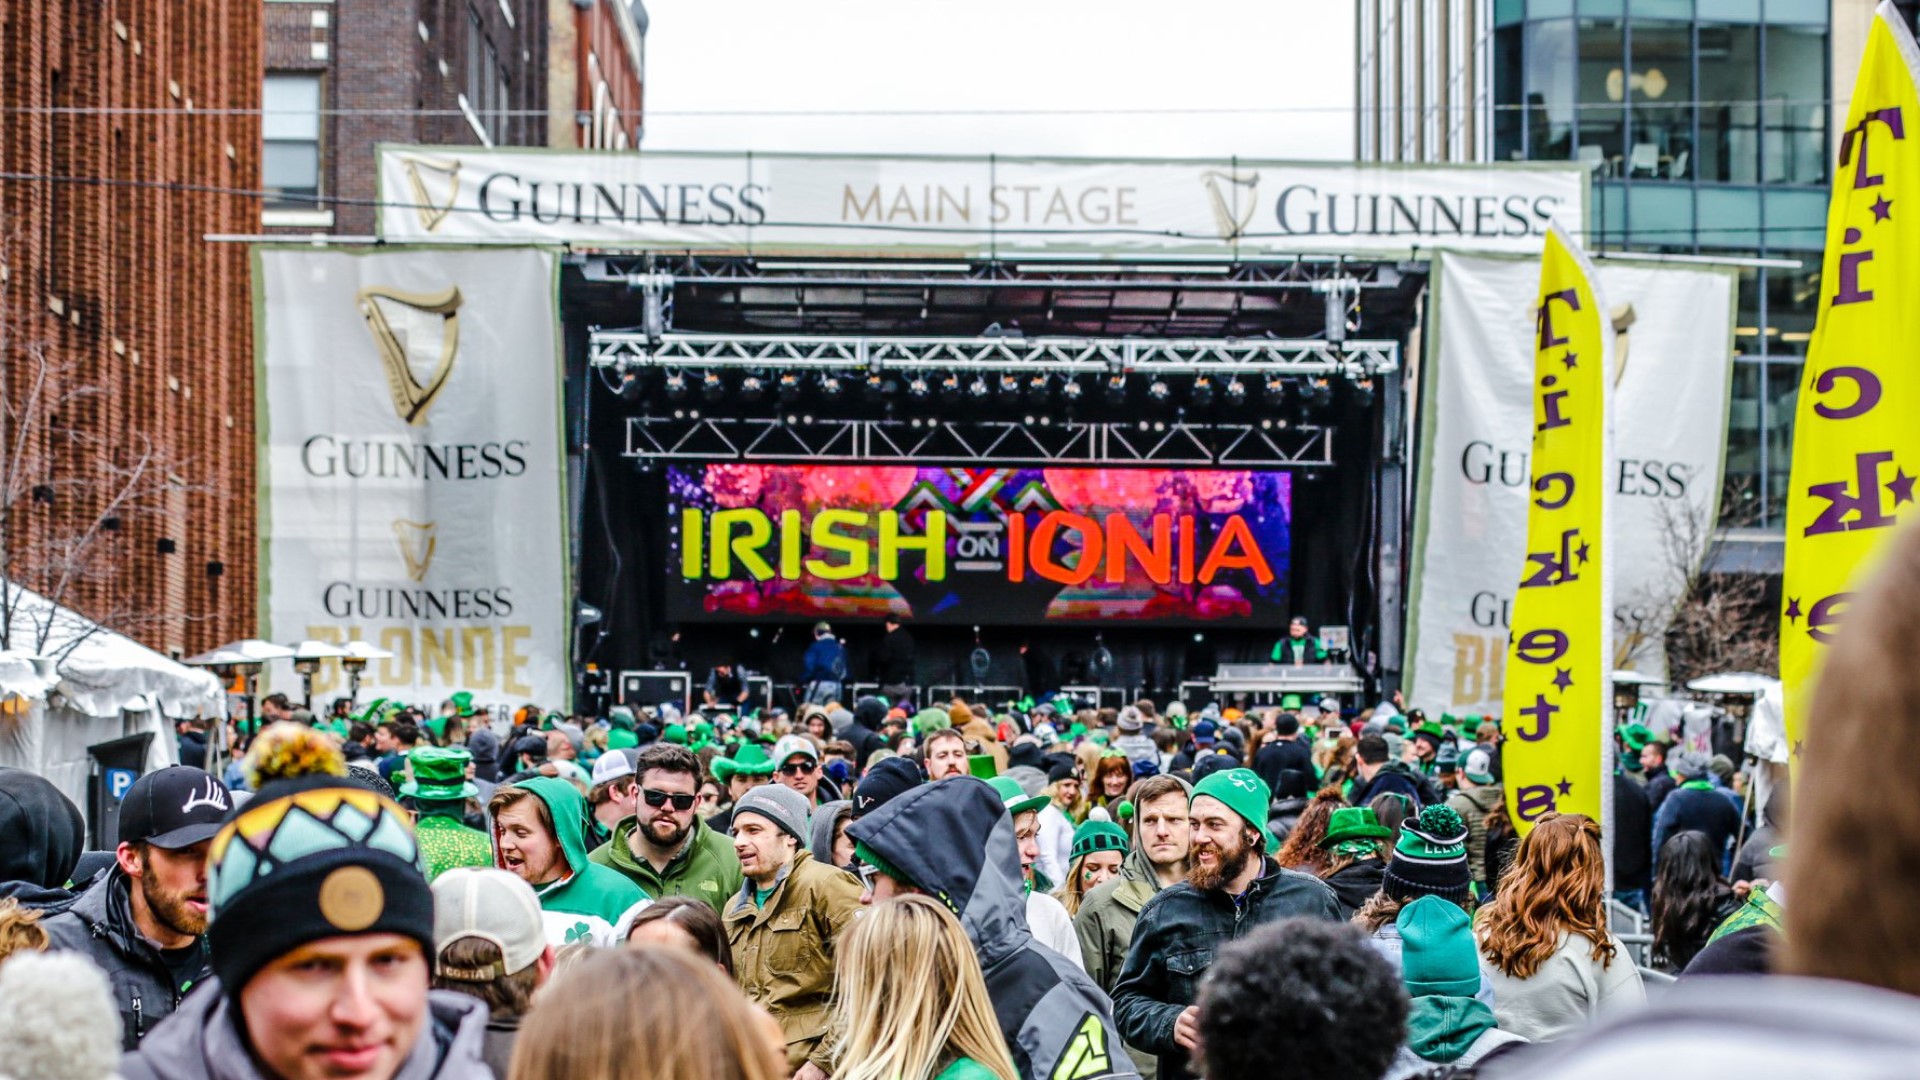 Irish on Ionia 11 years as MI's largest St. Patty's street fest